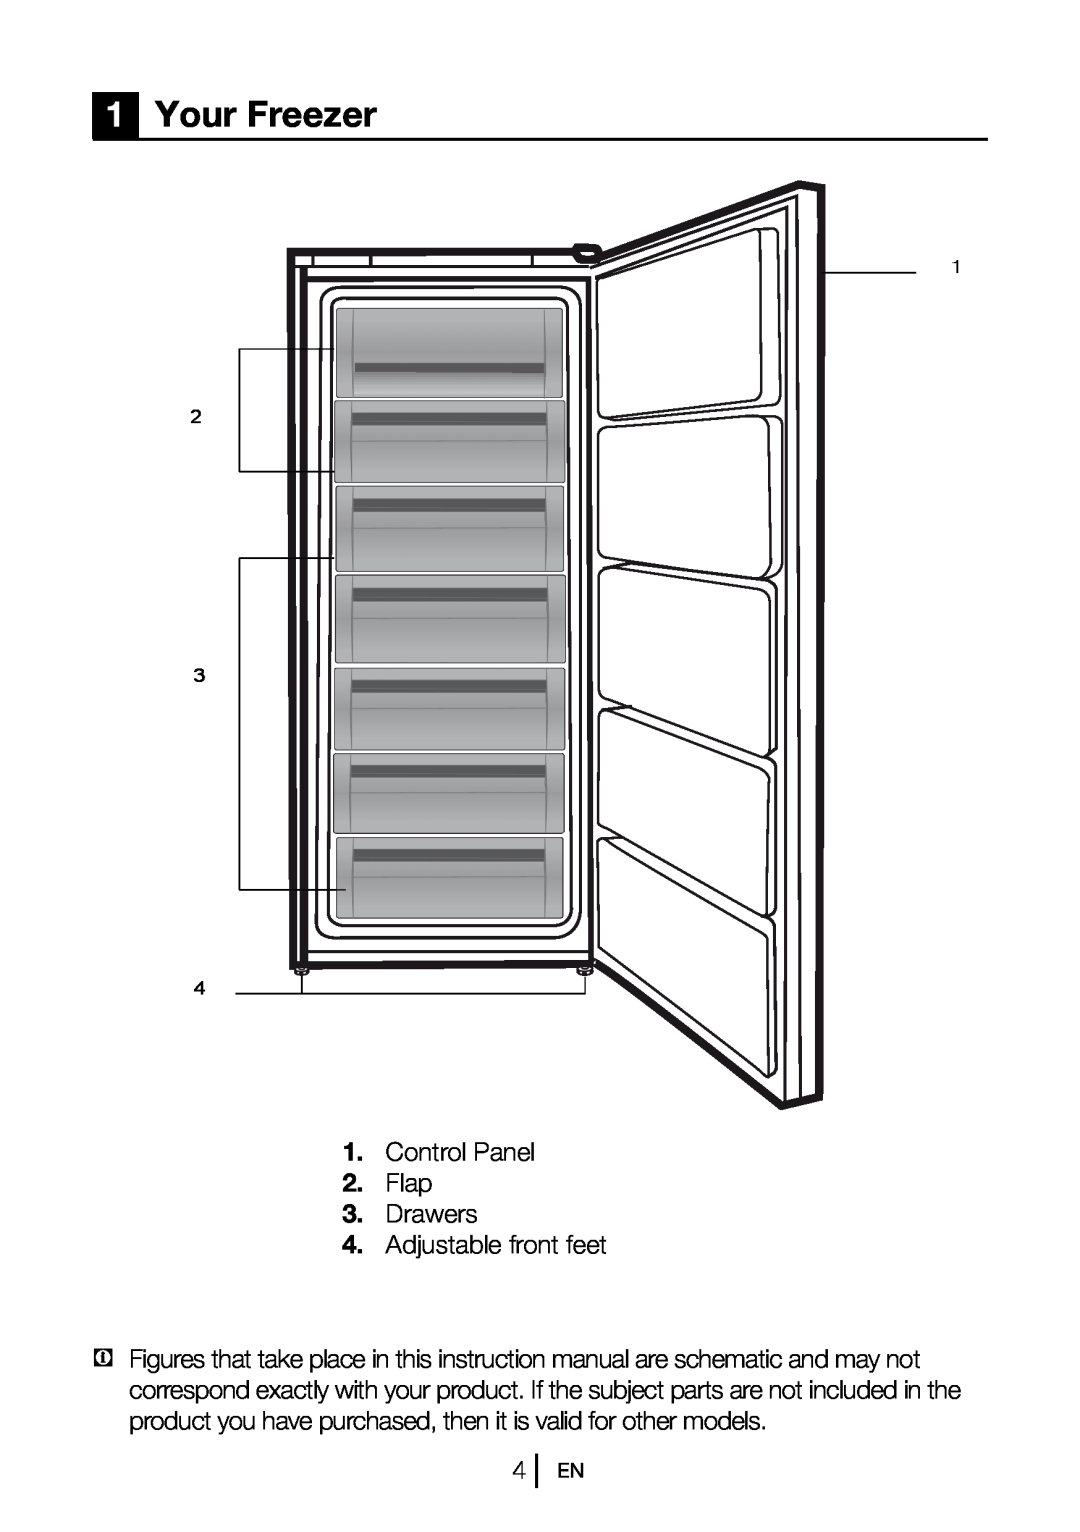 Beko FN 130430 manual 1Your Freezer, Control Panel 2.Flap 3.Drawers, Adjustable front feet, 1 2 3 